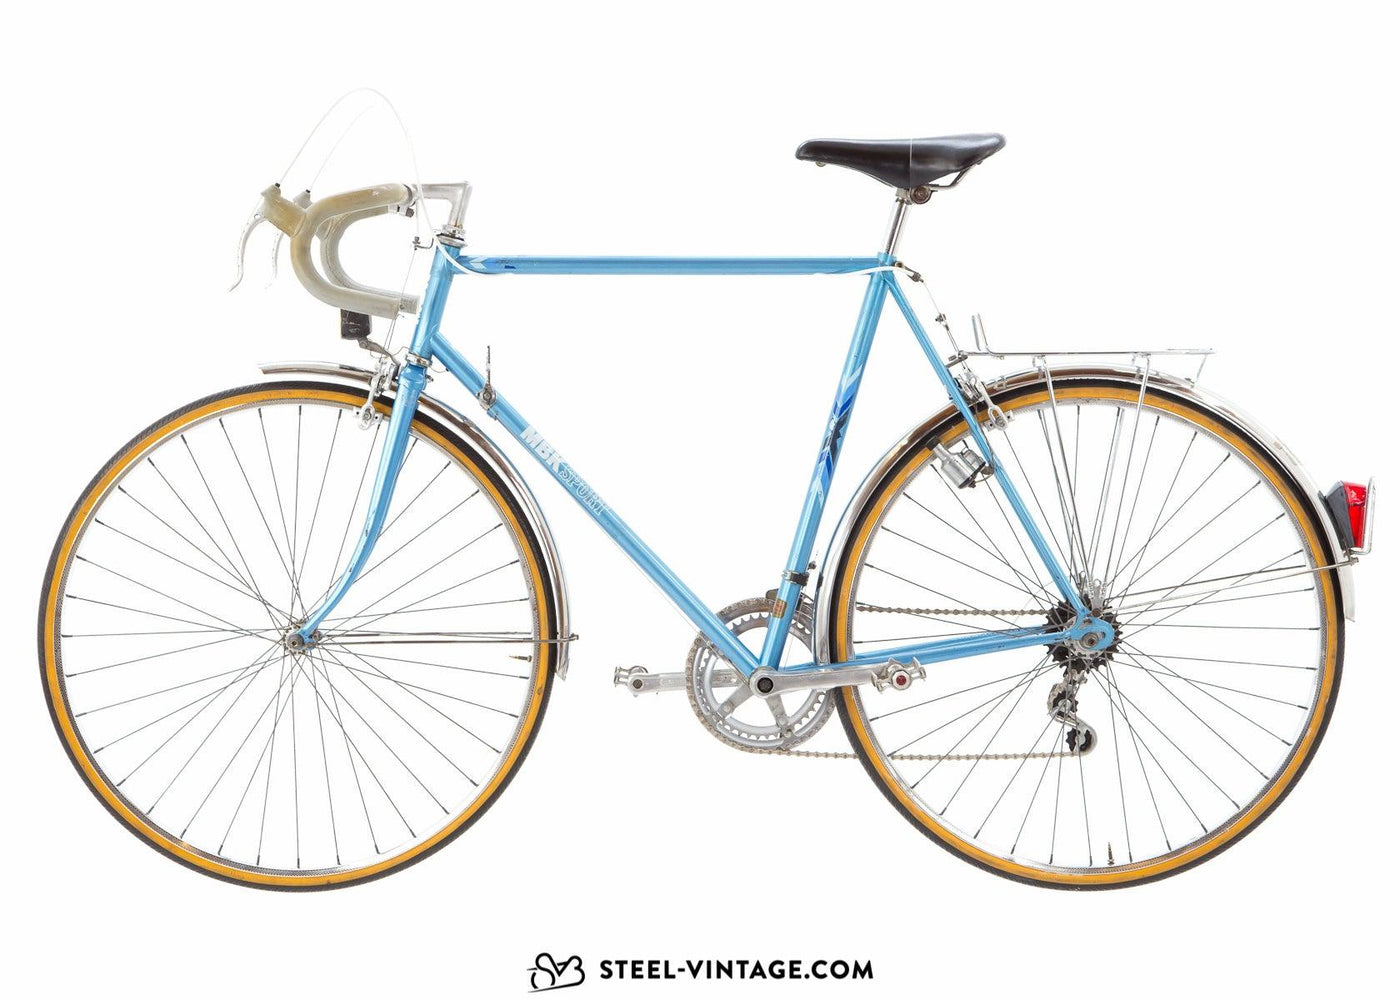 MBK Sport Classic French Road Bike 1980s - Steel Vintage Bikes